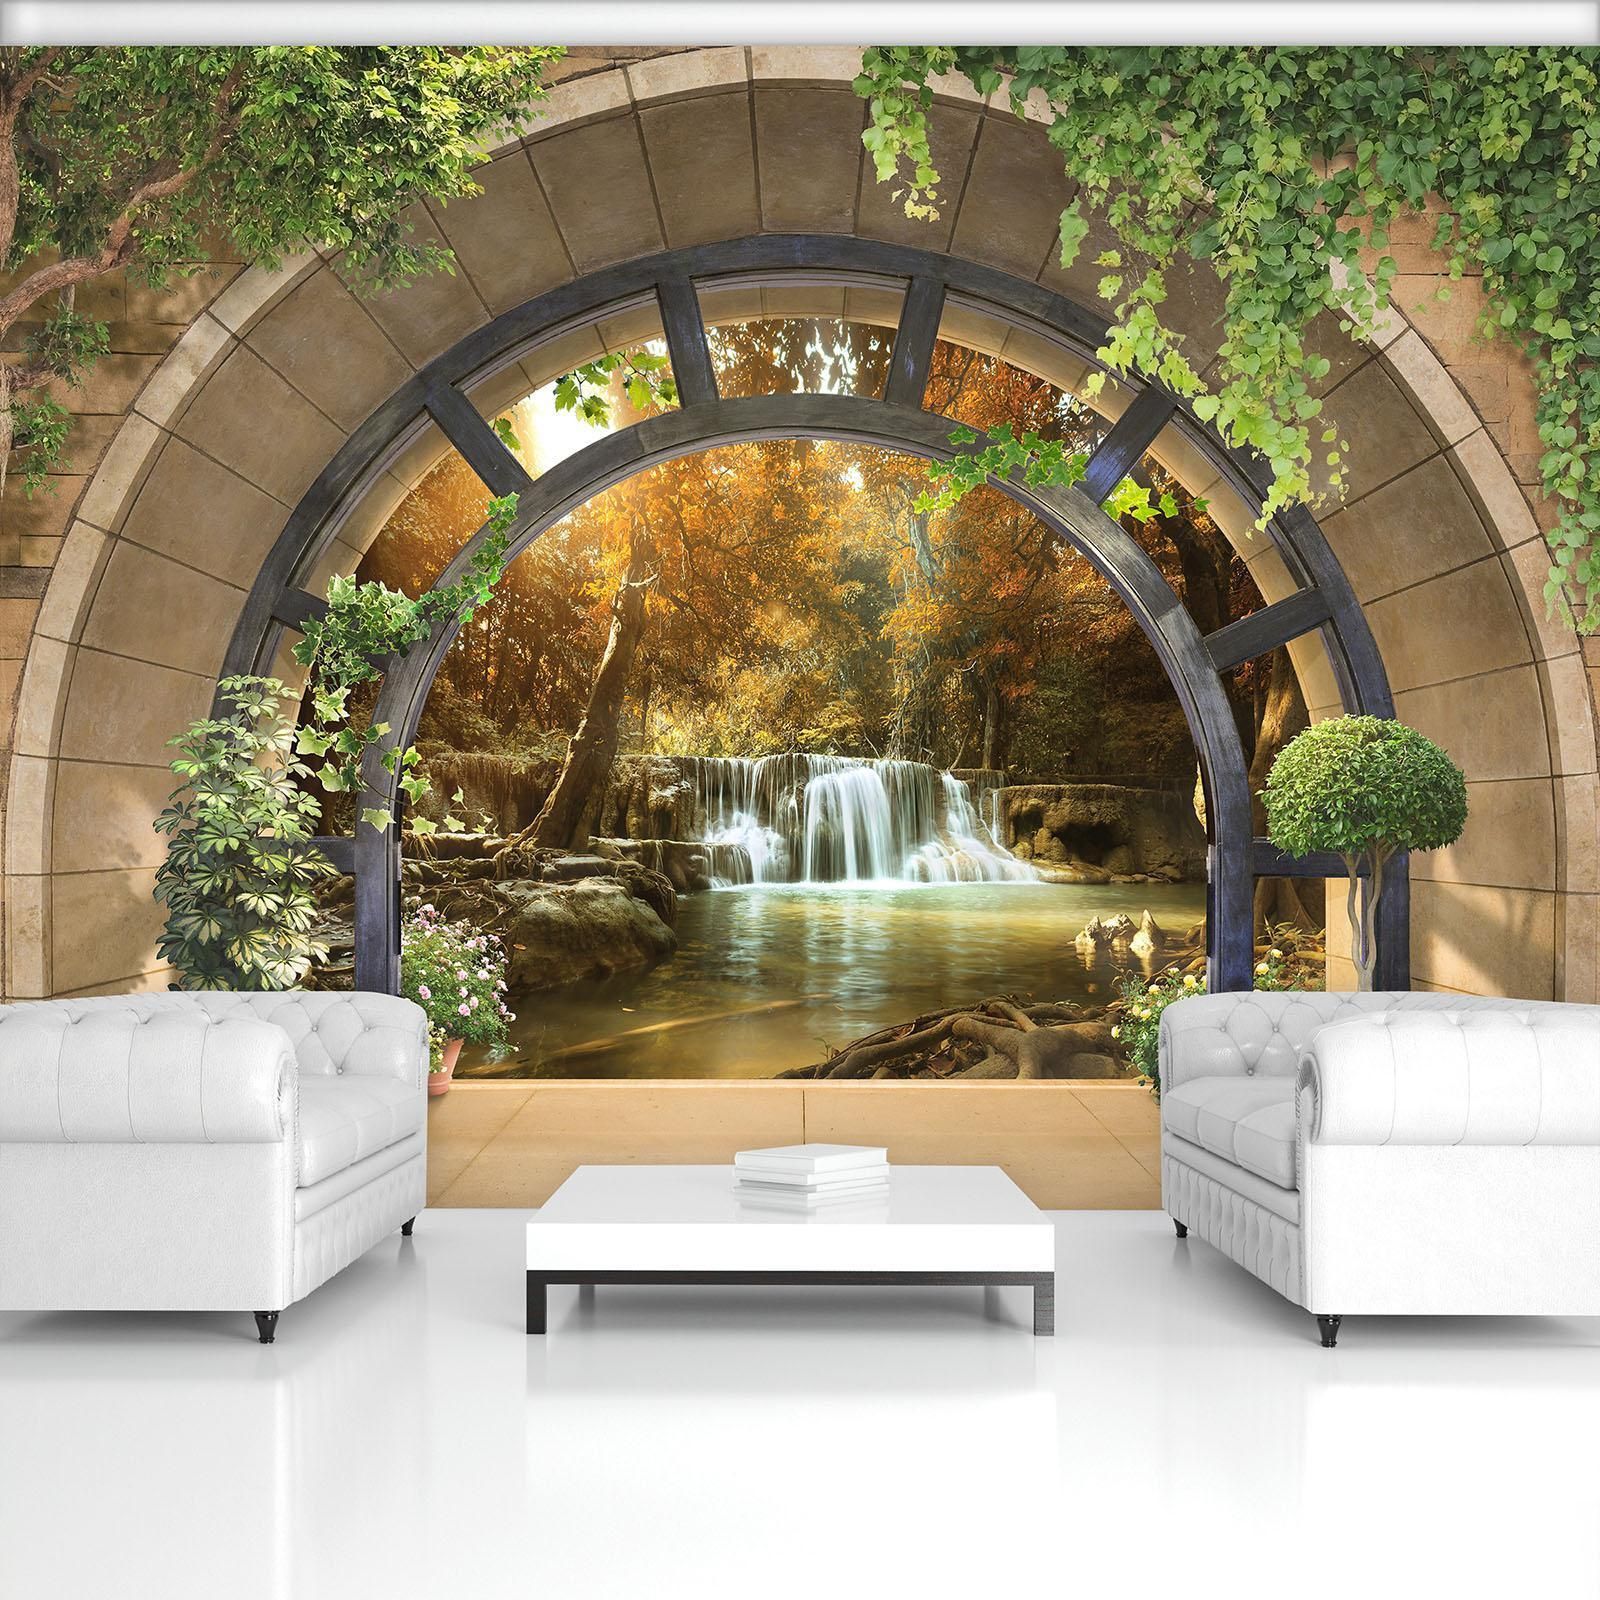 fond d'écran 3d effekt,mural,paysage naturel,mur,meubles,cambre